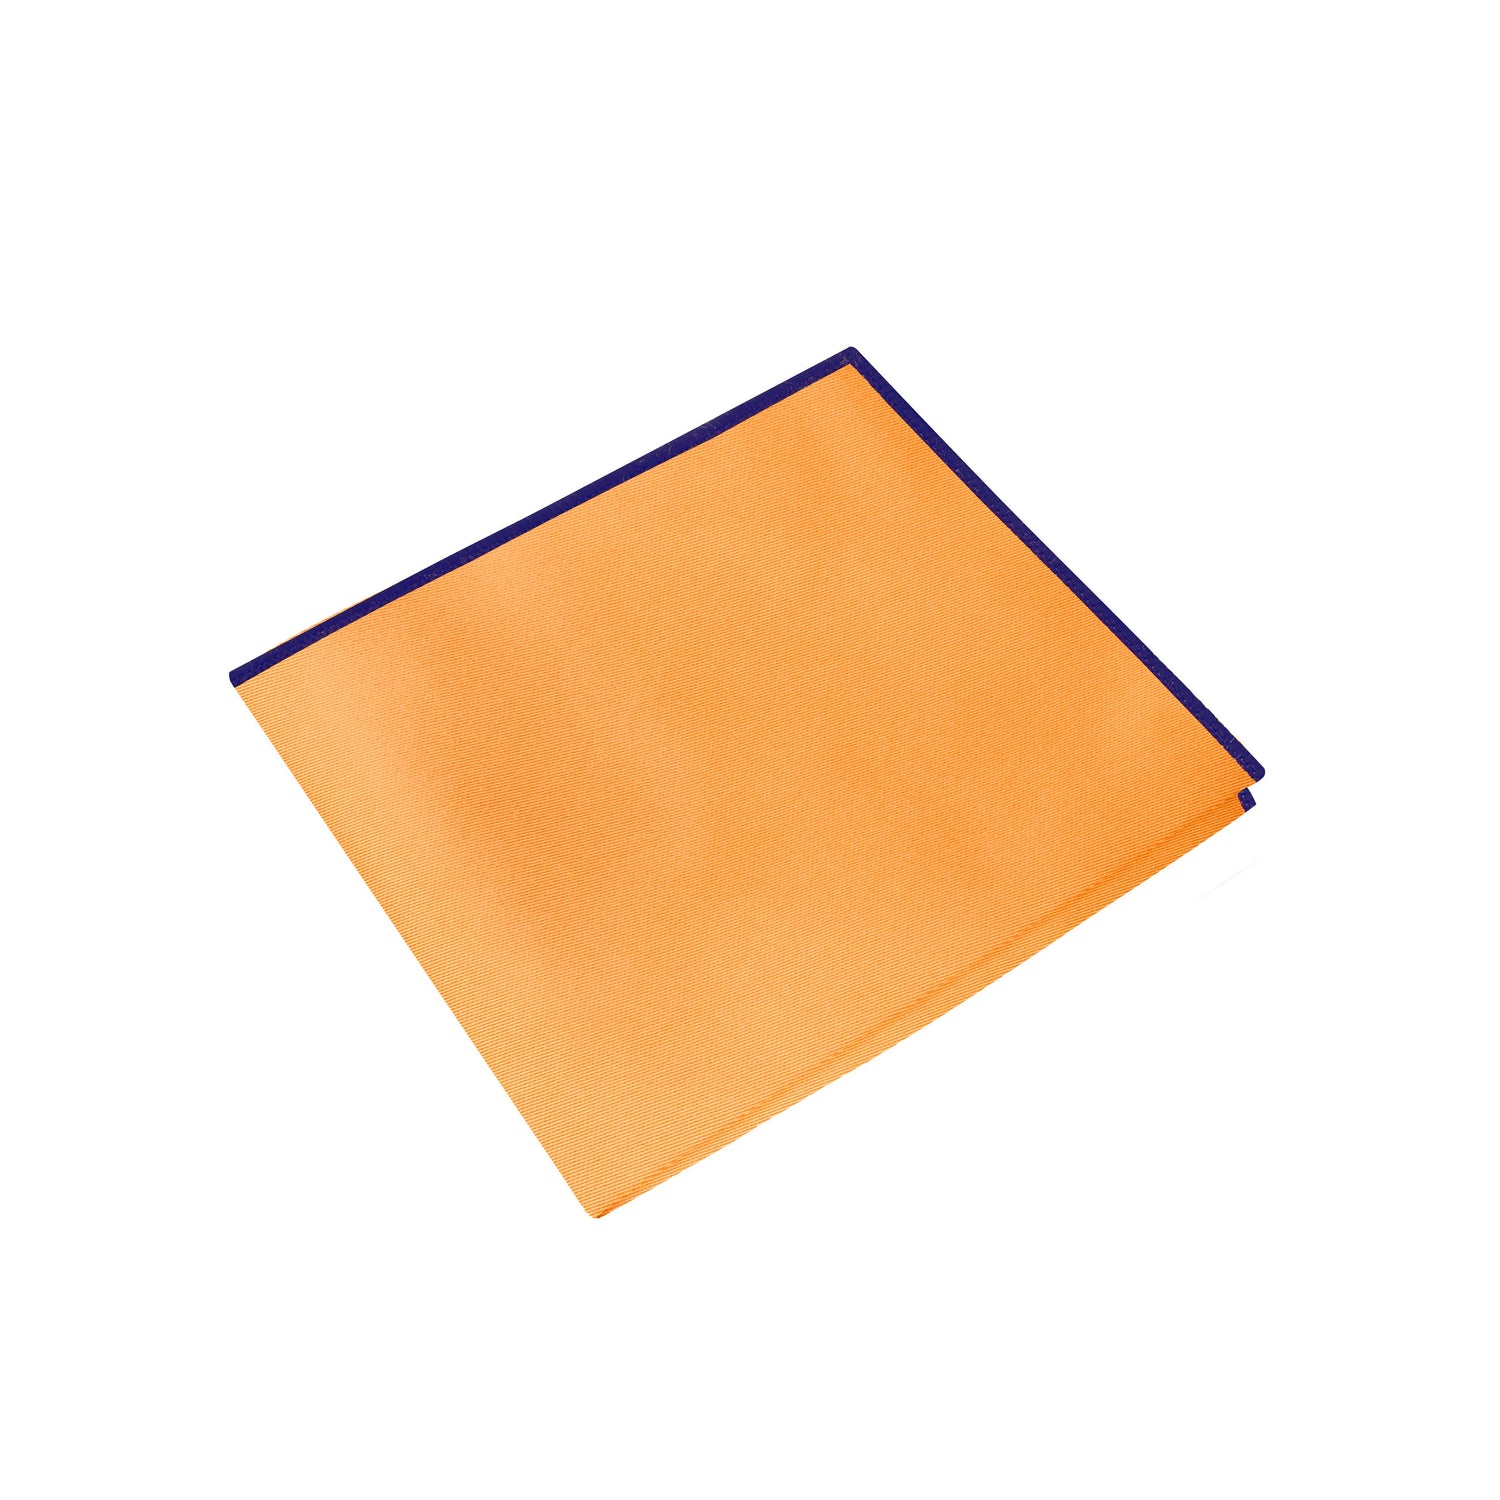 A Solid Orange with Dark Blue Edge Pocket Square